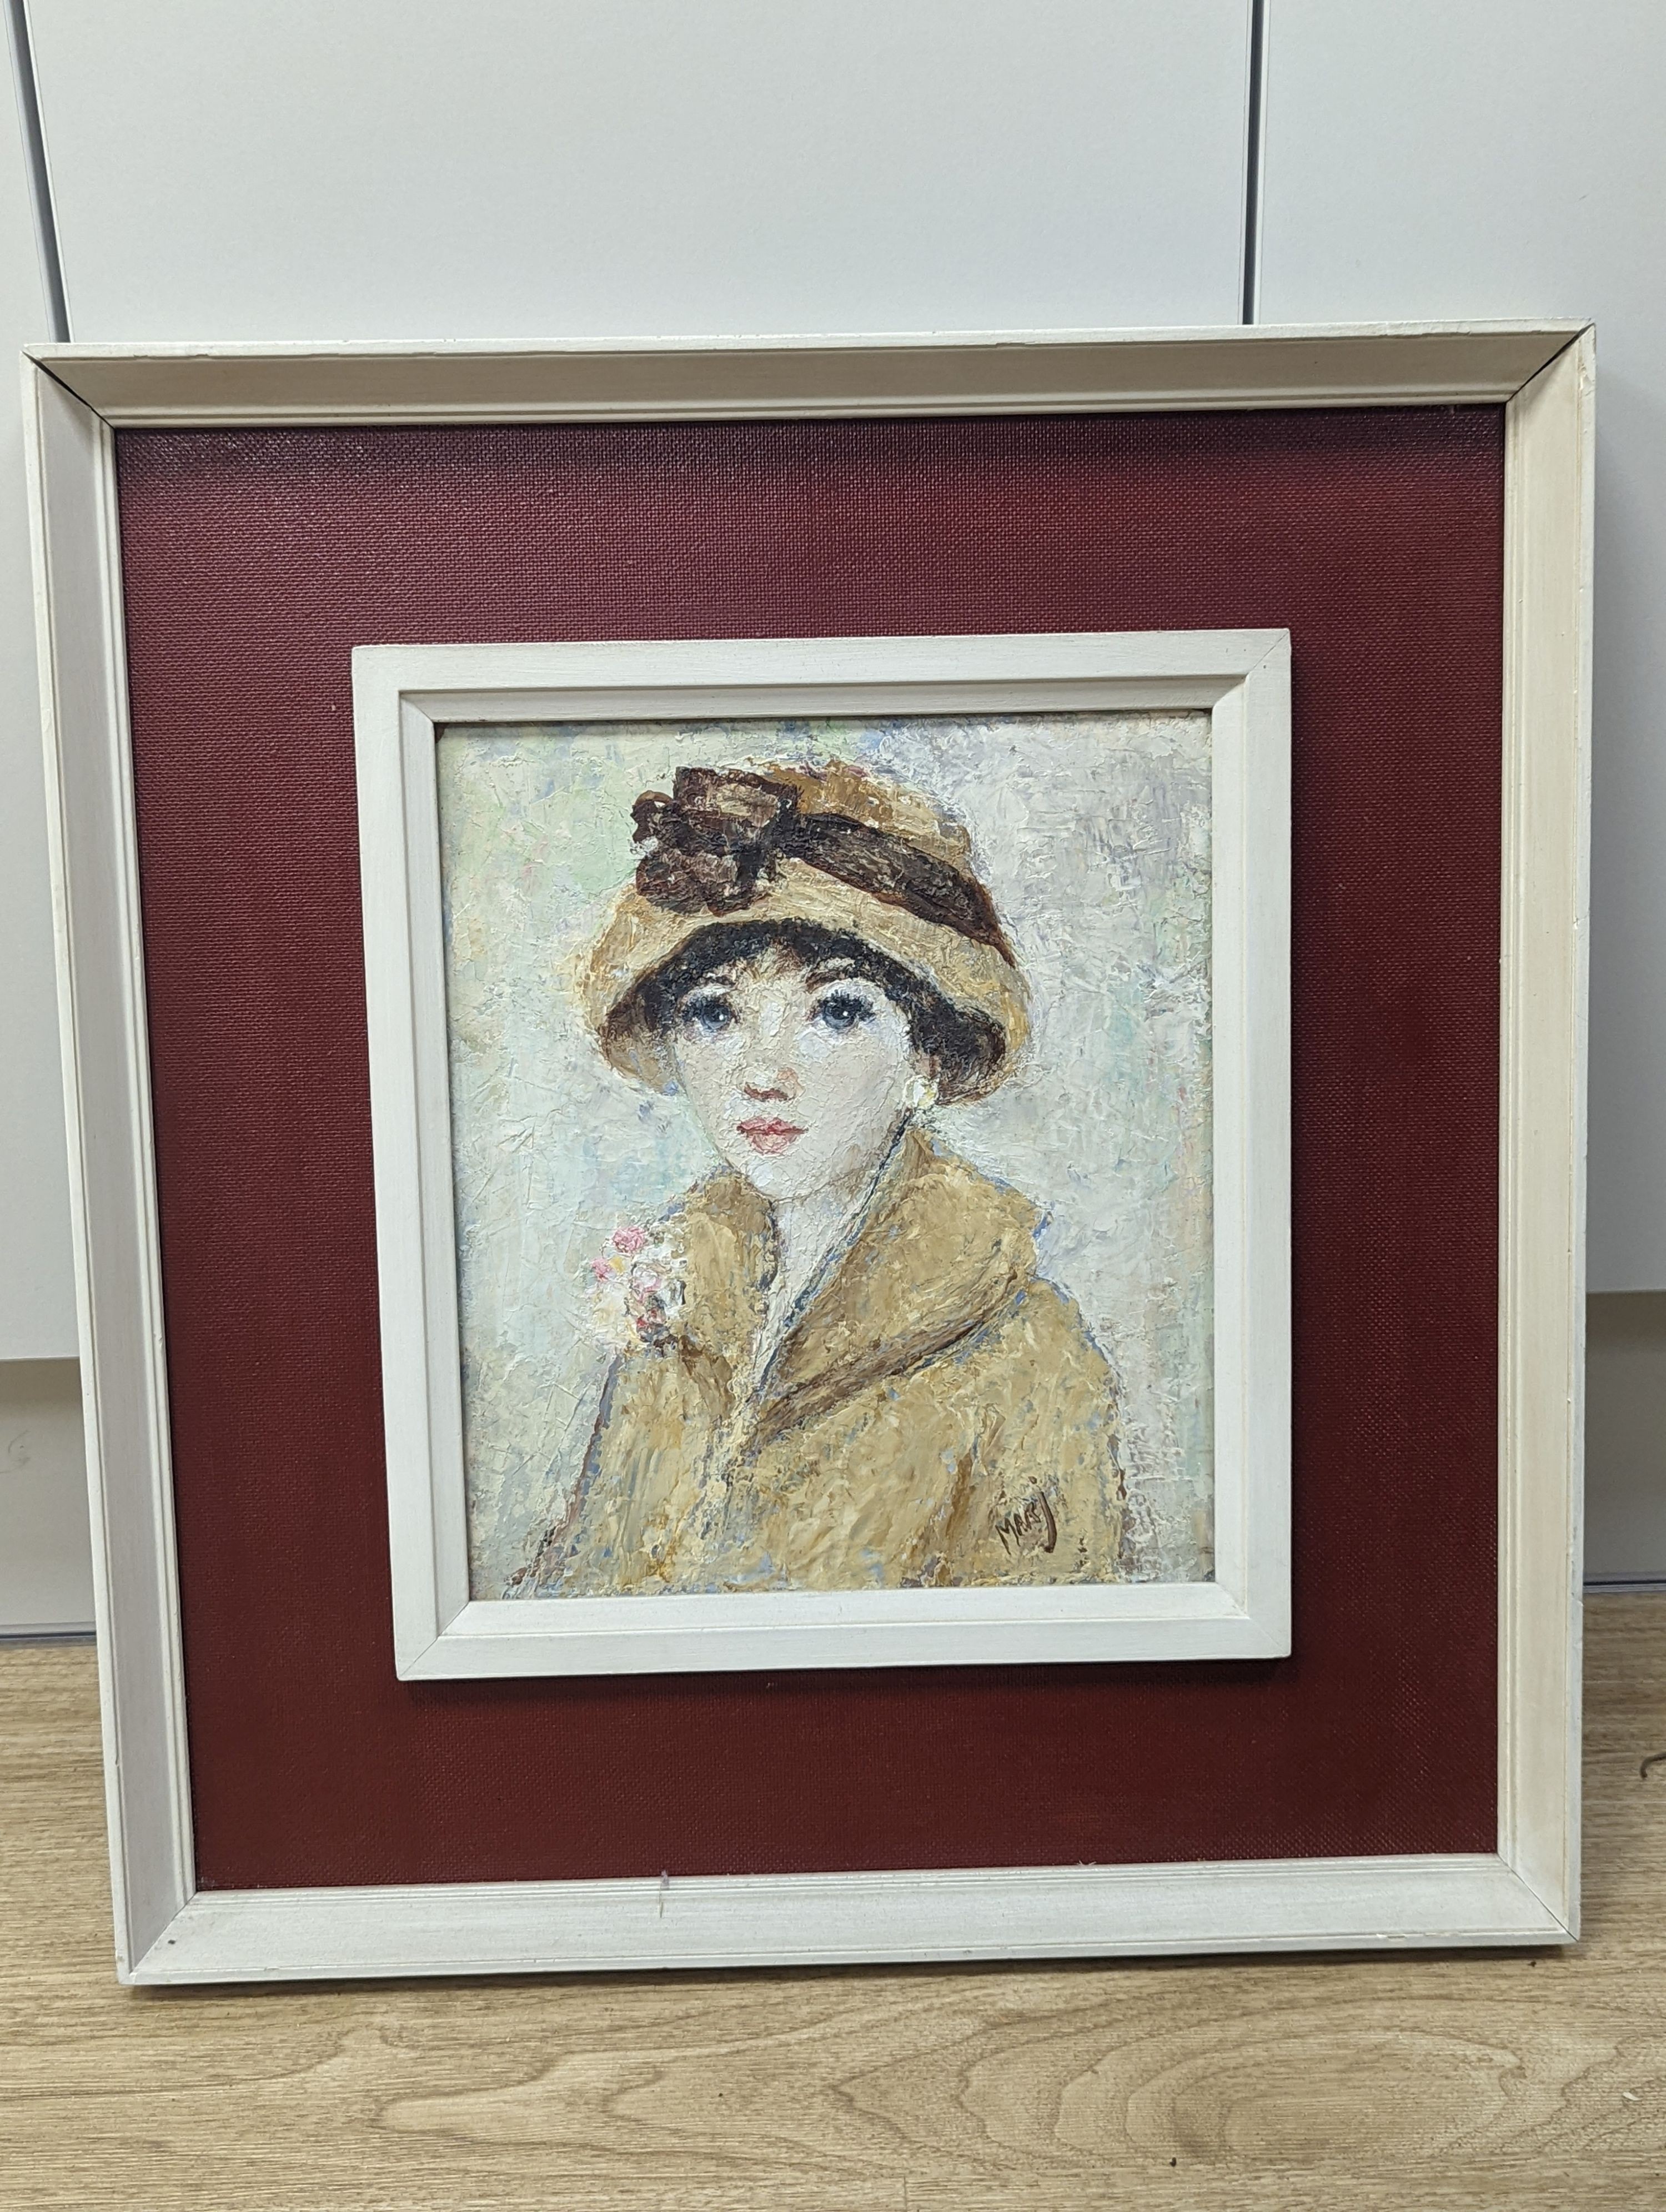 Modern British, Oil on board, mid 20th century Portrait of a lady, signed Marj, 27 x 23.5cm